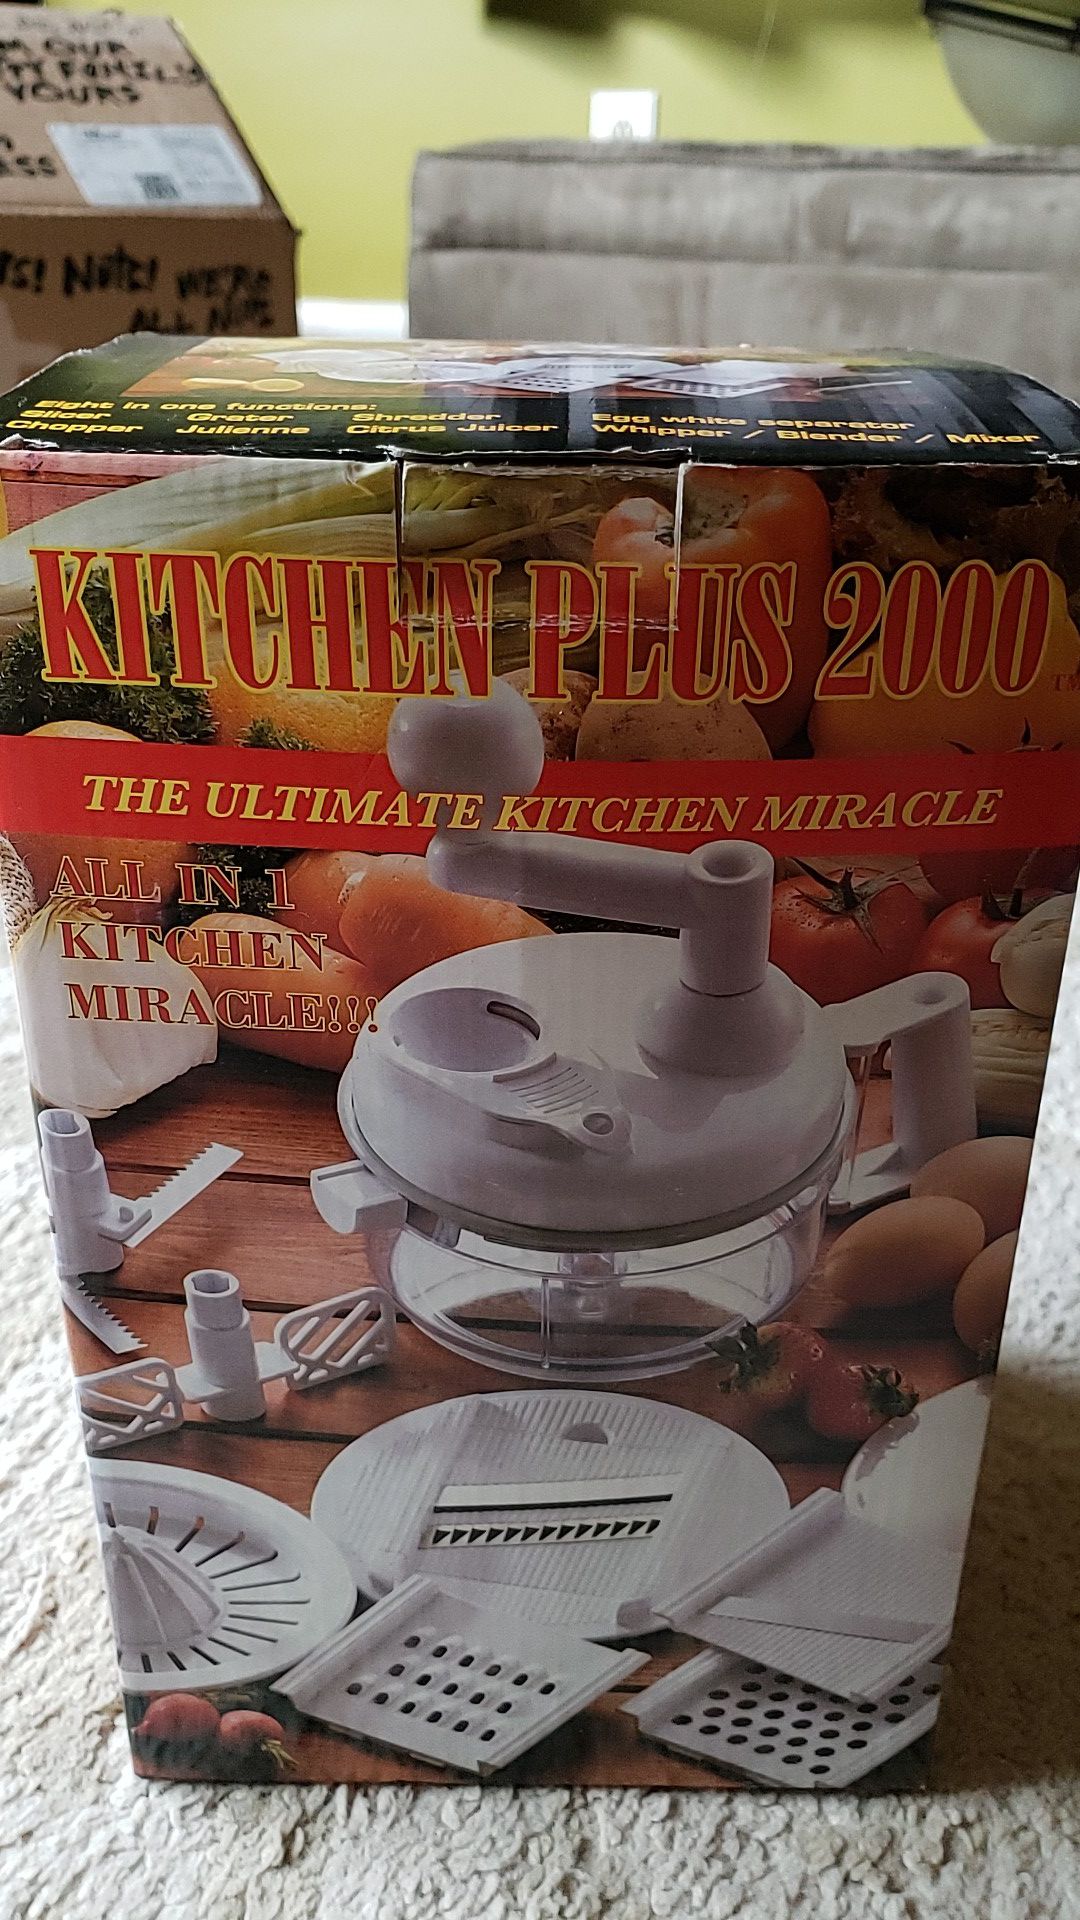 Kitchen Plus 2000 - Chopper/Slicer/Grater/etc.